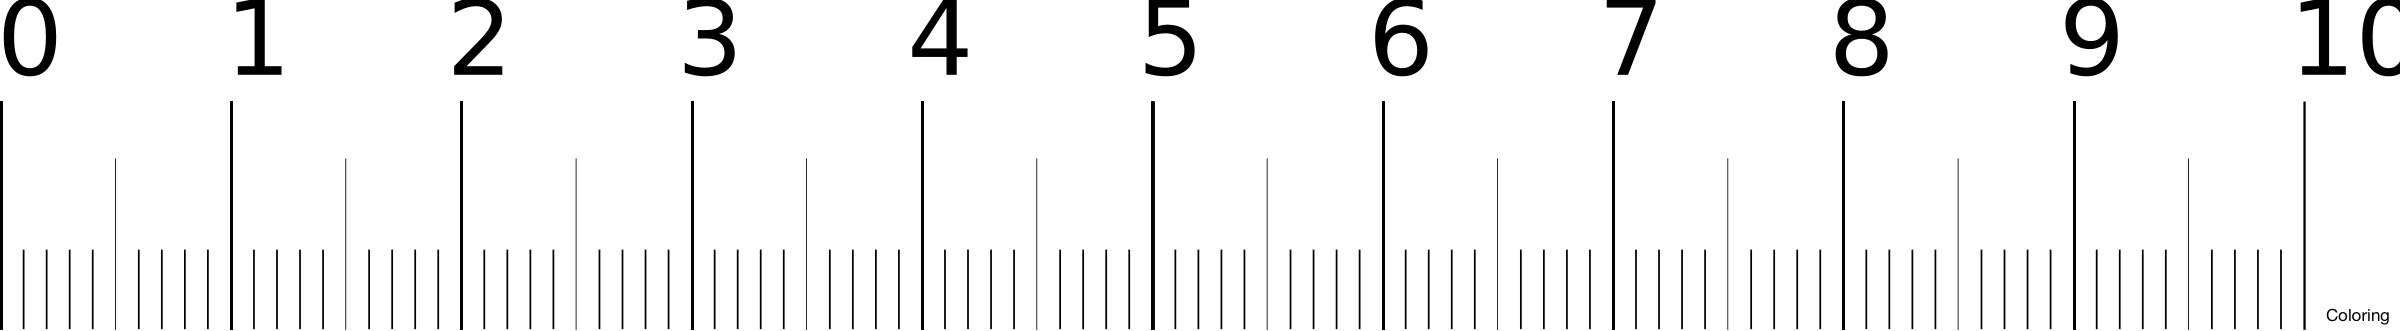 clipart ruler metre ruler